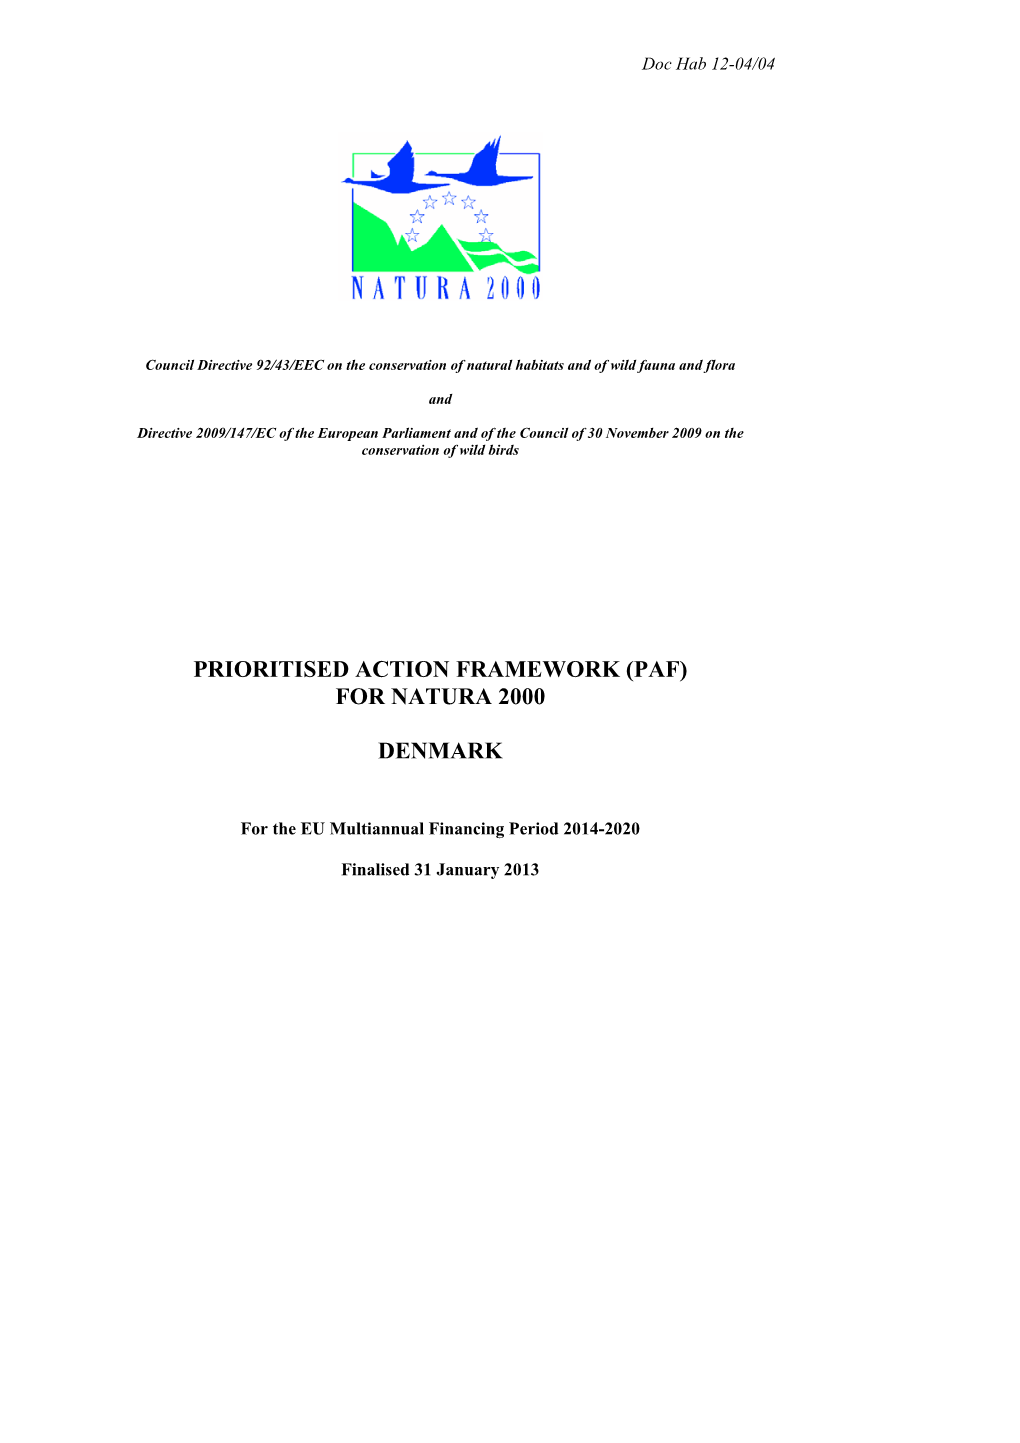 Prioritised Action Framework (Paf) for Natura 2000 Denmark